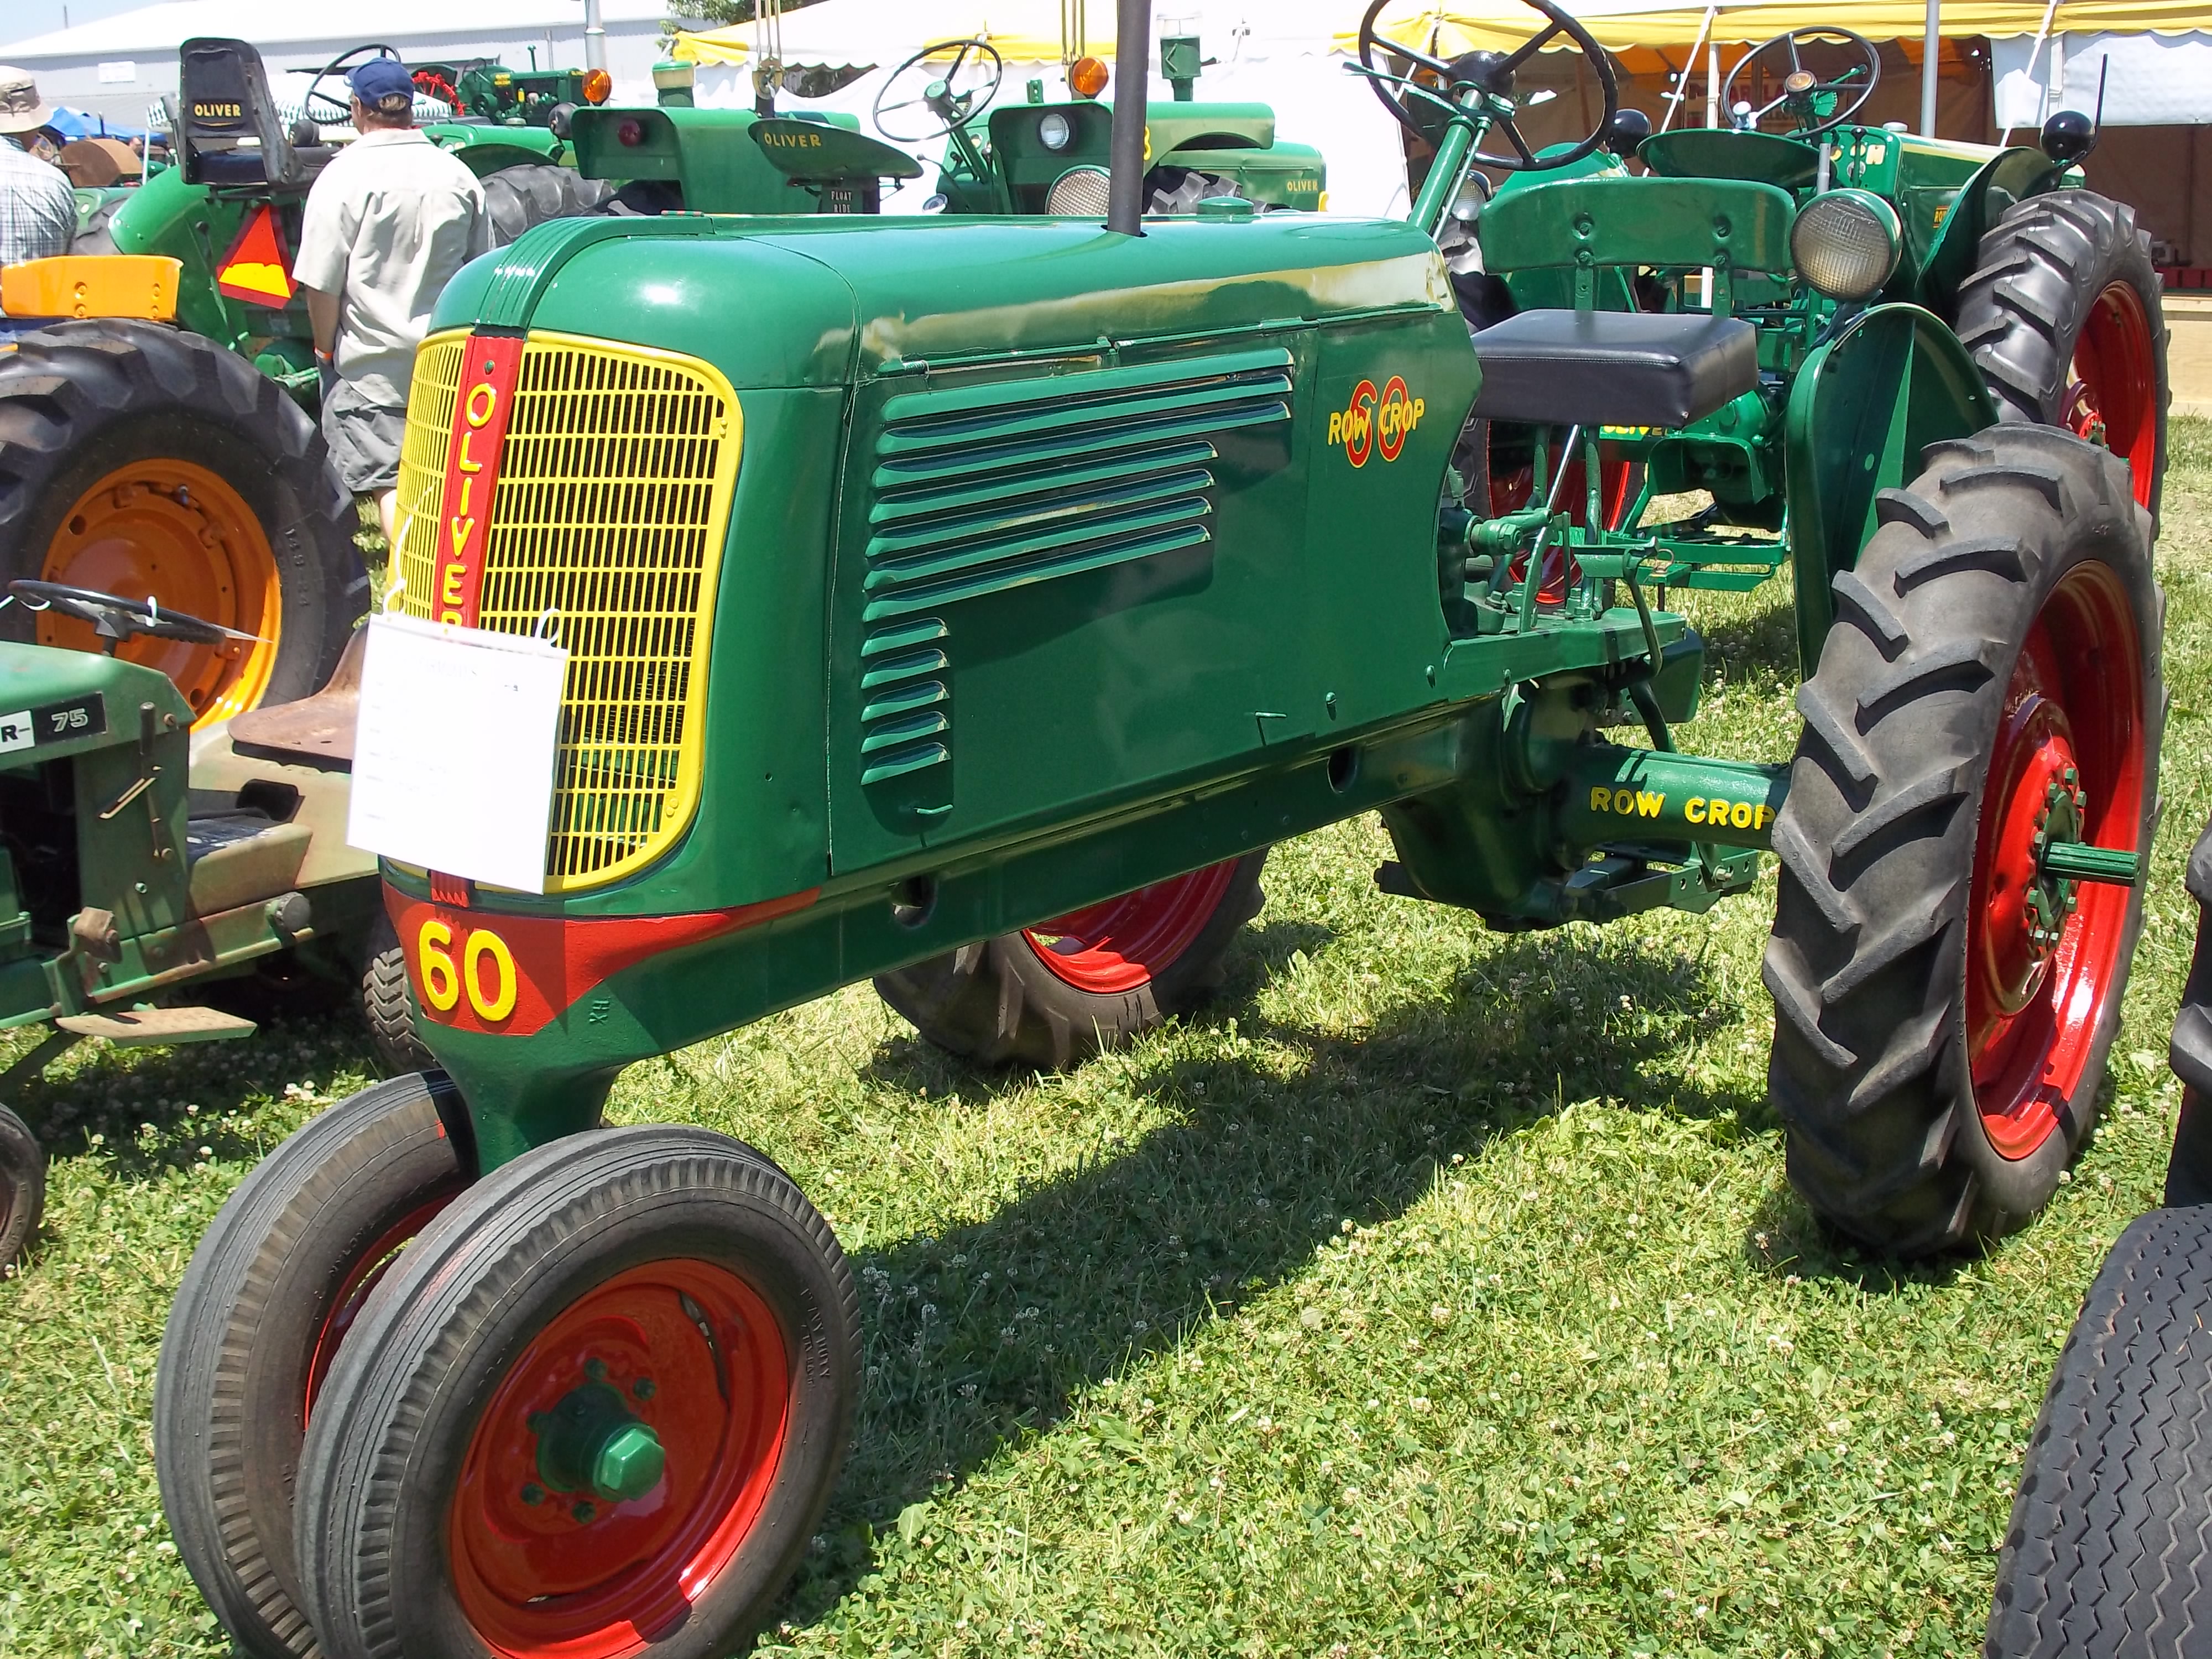 Oliver 60 tractor | Oliver Tractors & Equipment | Pinterest